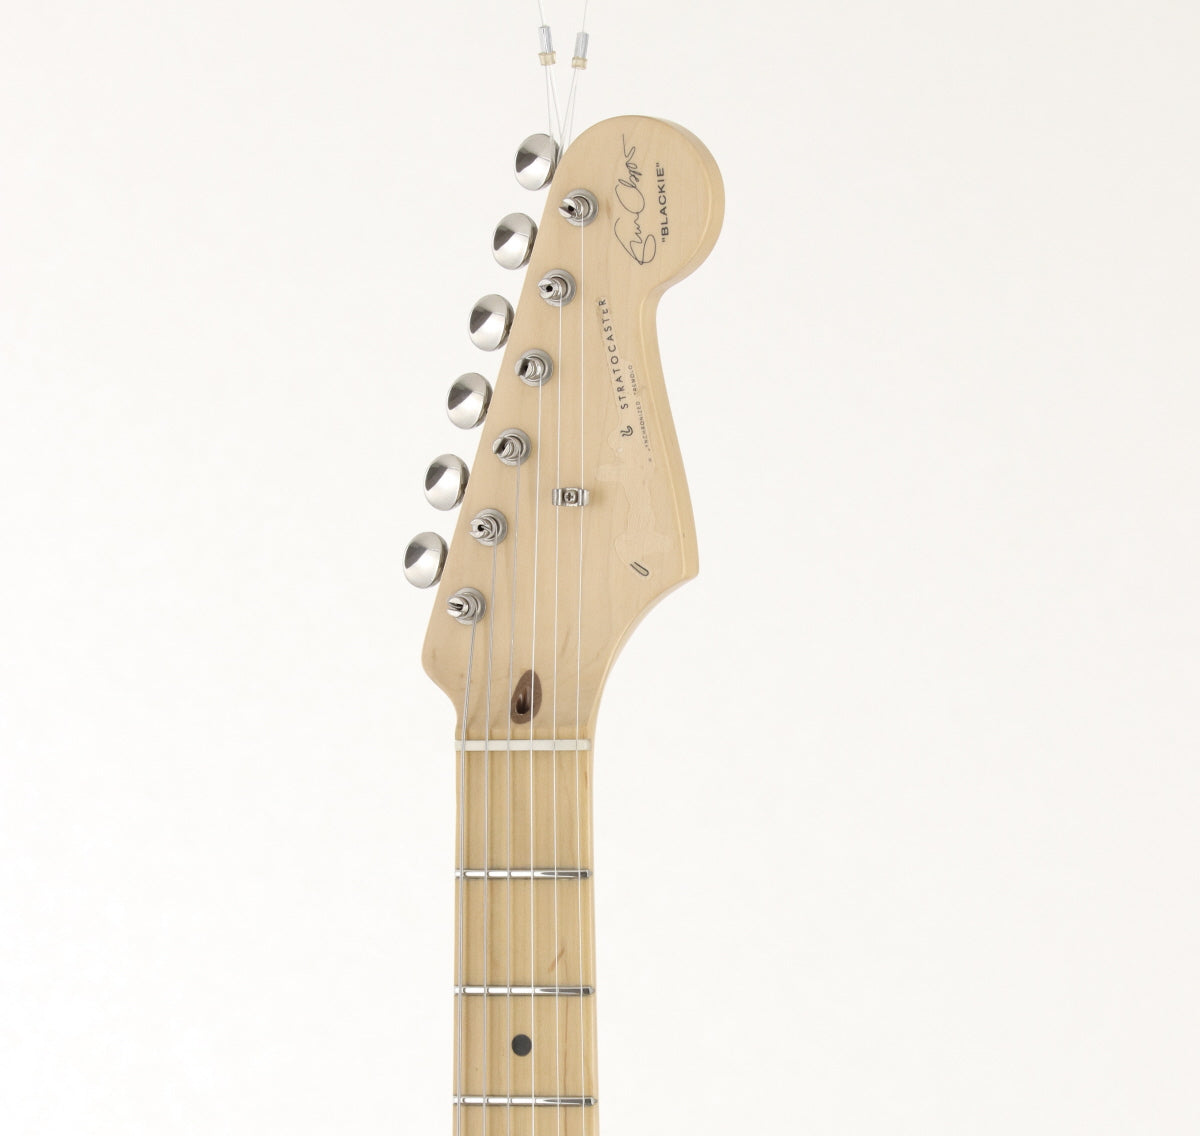 [SN SZ3234100] USED Fender / Artist Series Eric Clapton Stratocaster Black 2004 [06]